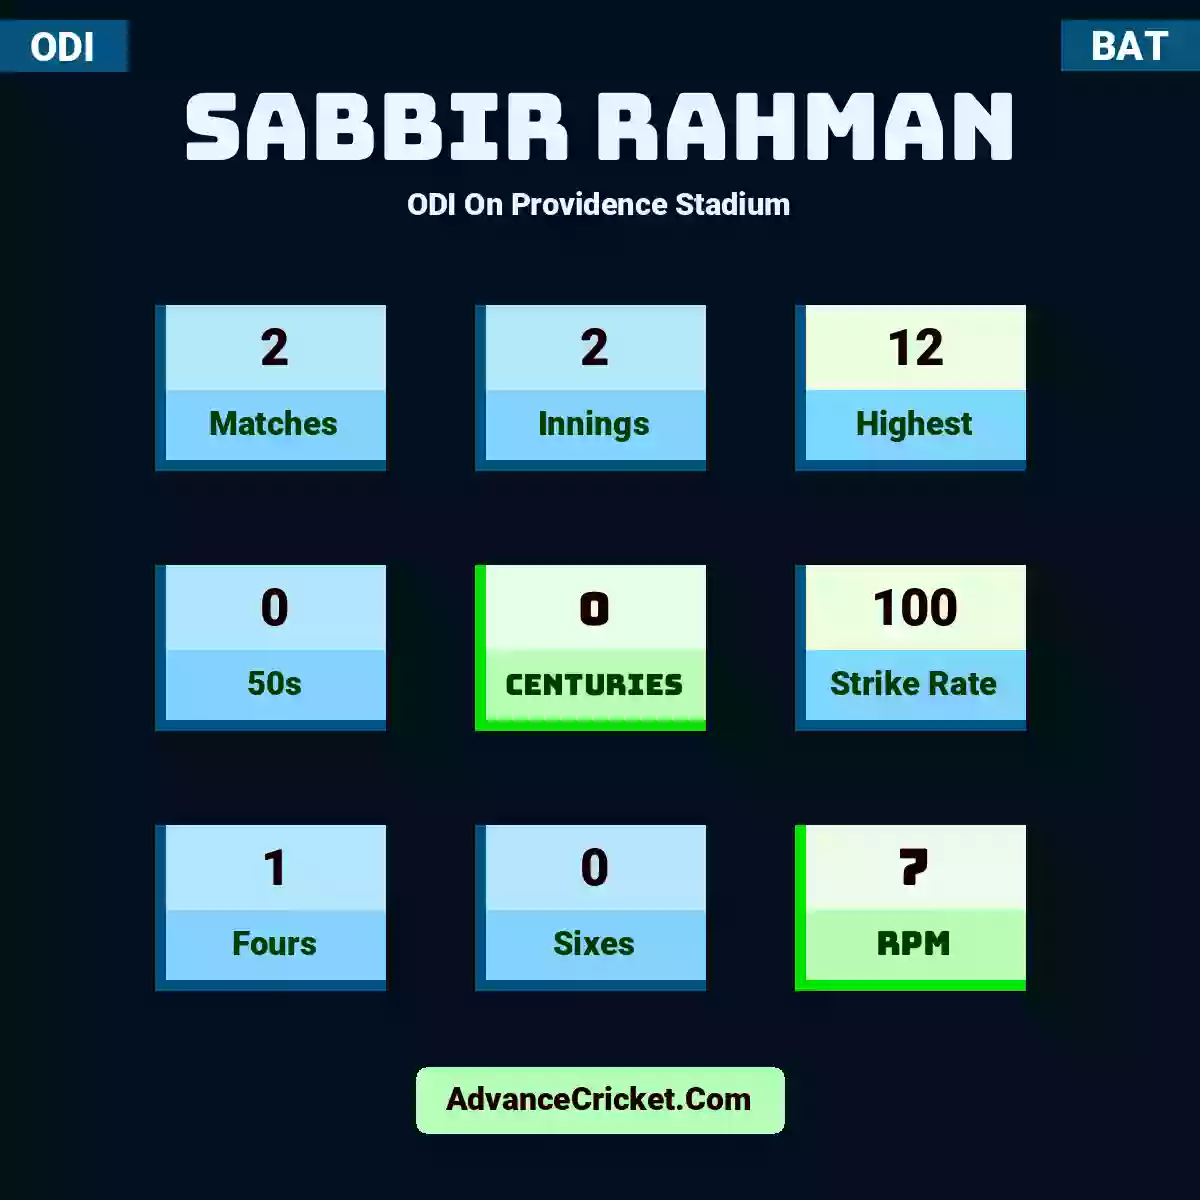 Sabbir Rahman ODI  On Providence Stadium, Sabbir Rahman played 2 matches, scored 12 runs as highest, 0 half-centuries, and 0 centuries, with a strike rate of 100. S.Rahman hit 1 fours and 0 sixes, with an RPM of 7.